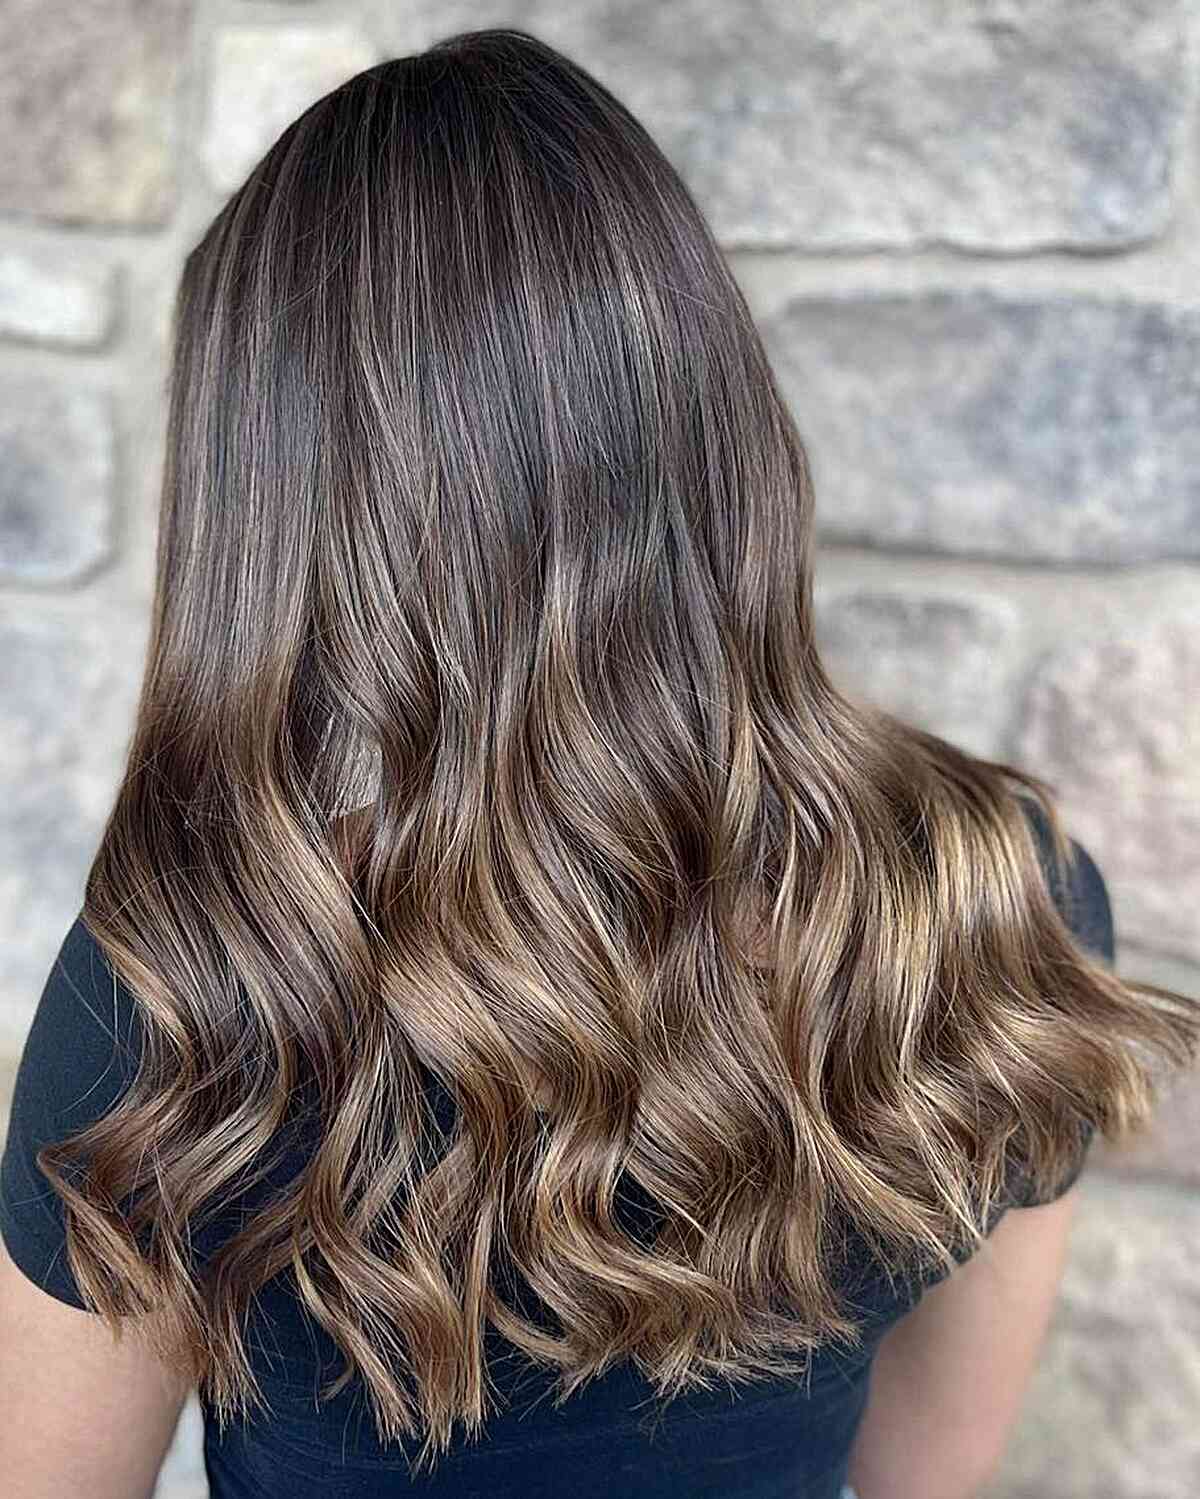 Mid Back-Length Mushroom Brown Balayage Hair with Caramel Drizzle